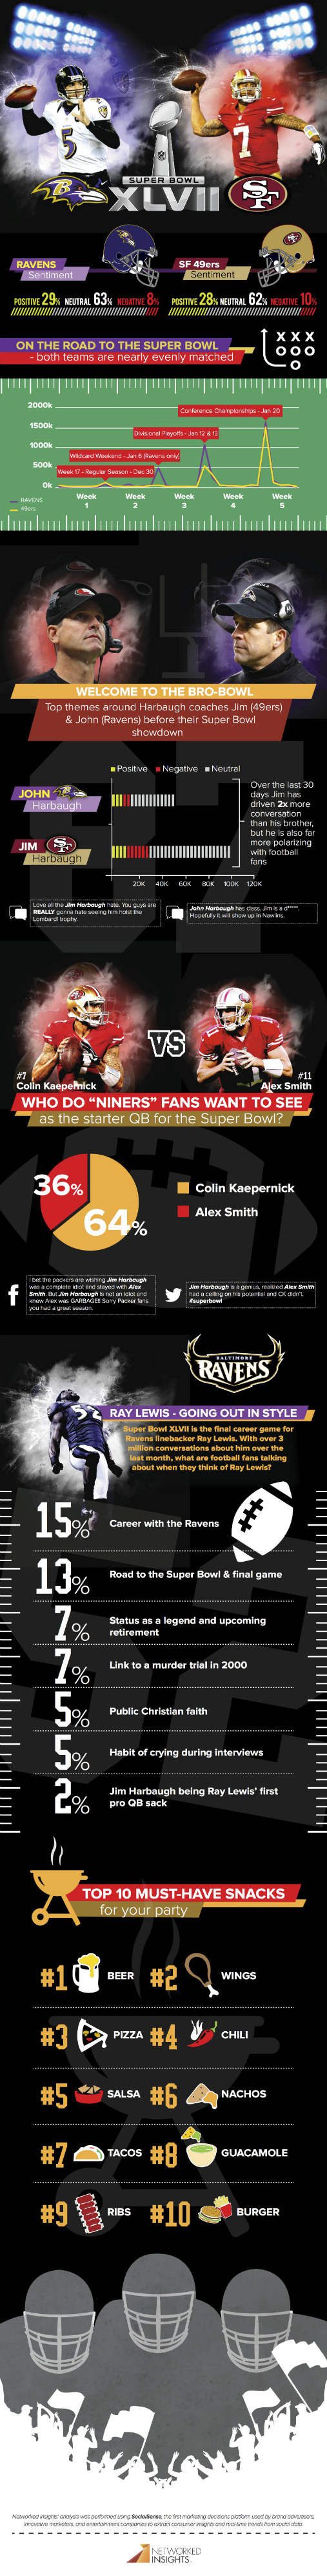 Super Bowl Infographic